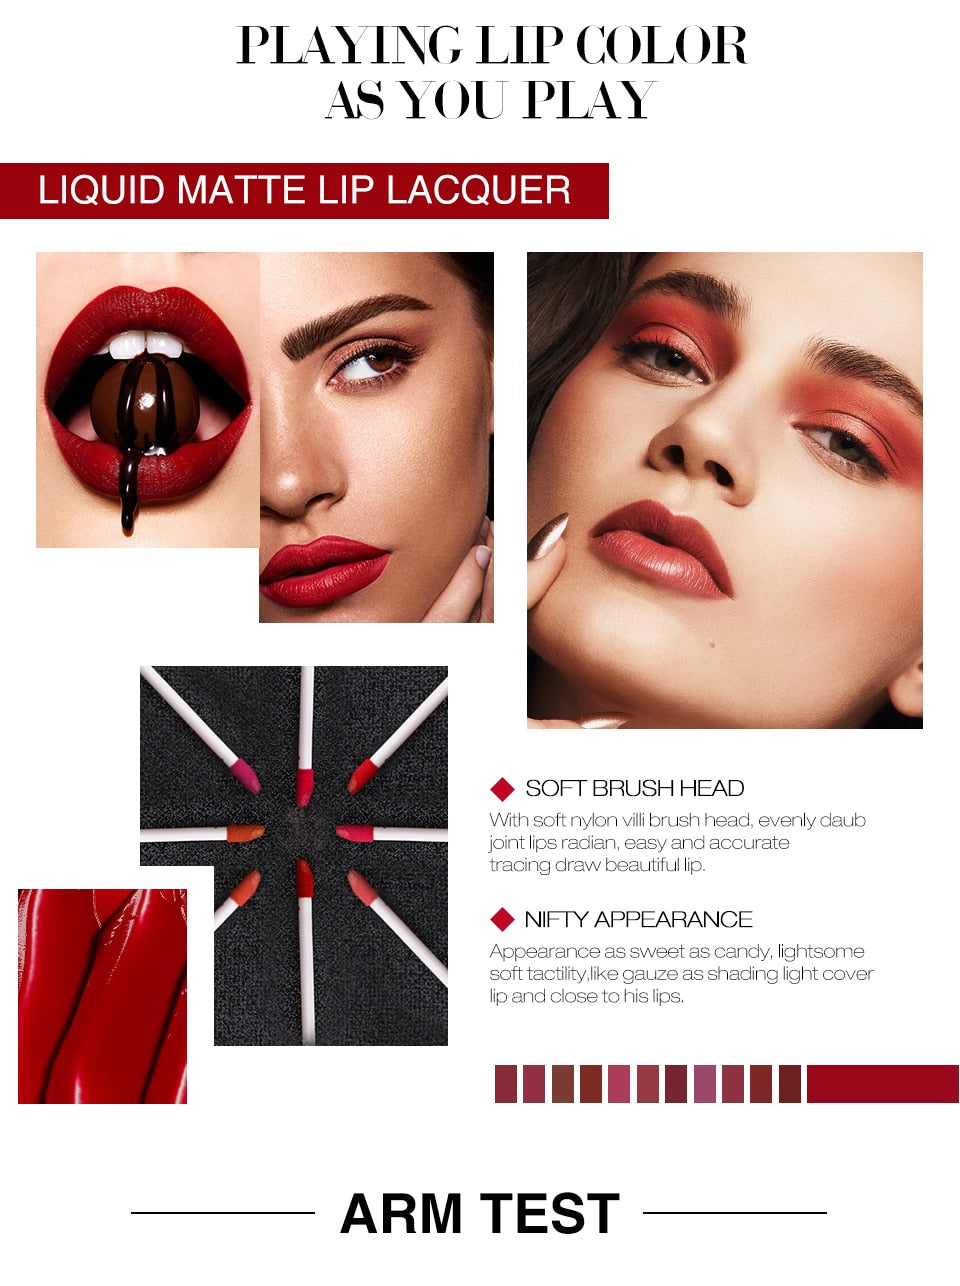 Matte Lipstick Liquid Waterproof Long Lasting Velvet Lip Gloss Makeup Smooth Pigment Lip Tint Red Lips Cosmetics - SixtyKey new model design Dubai fashion style 2021 best price